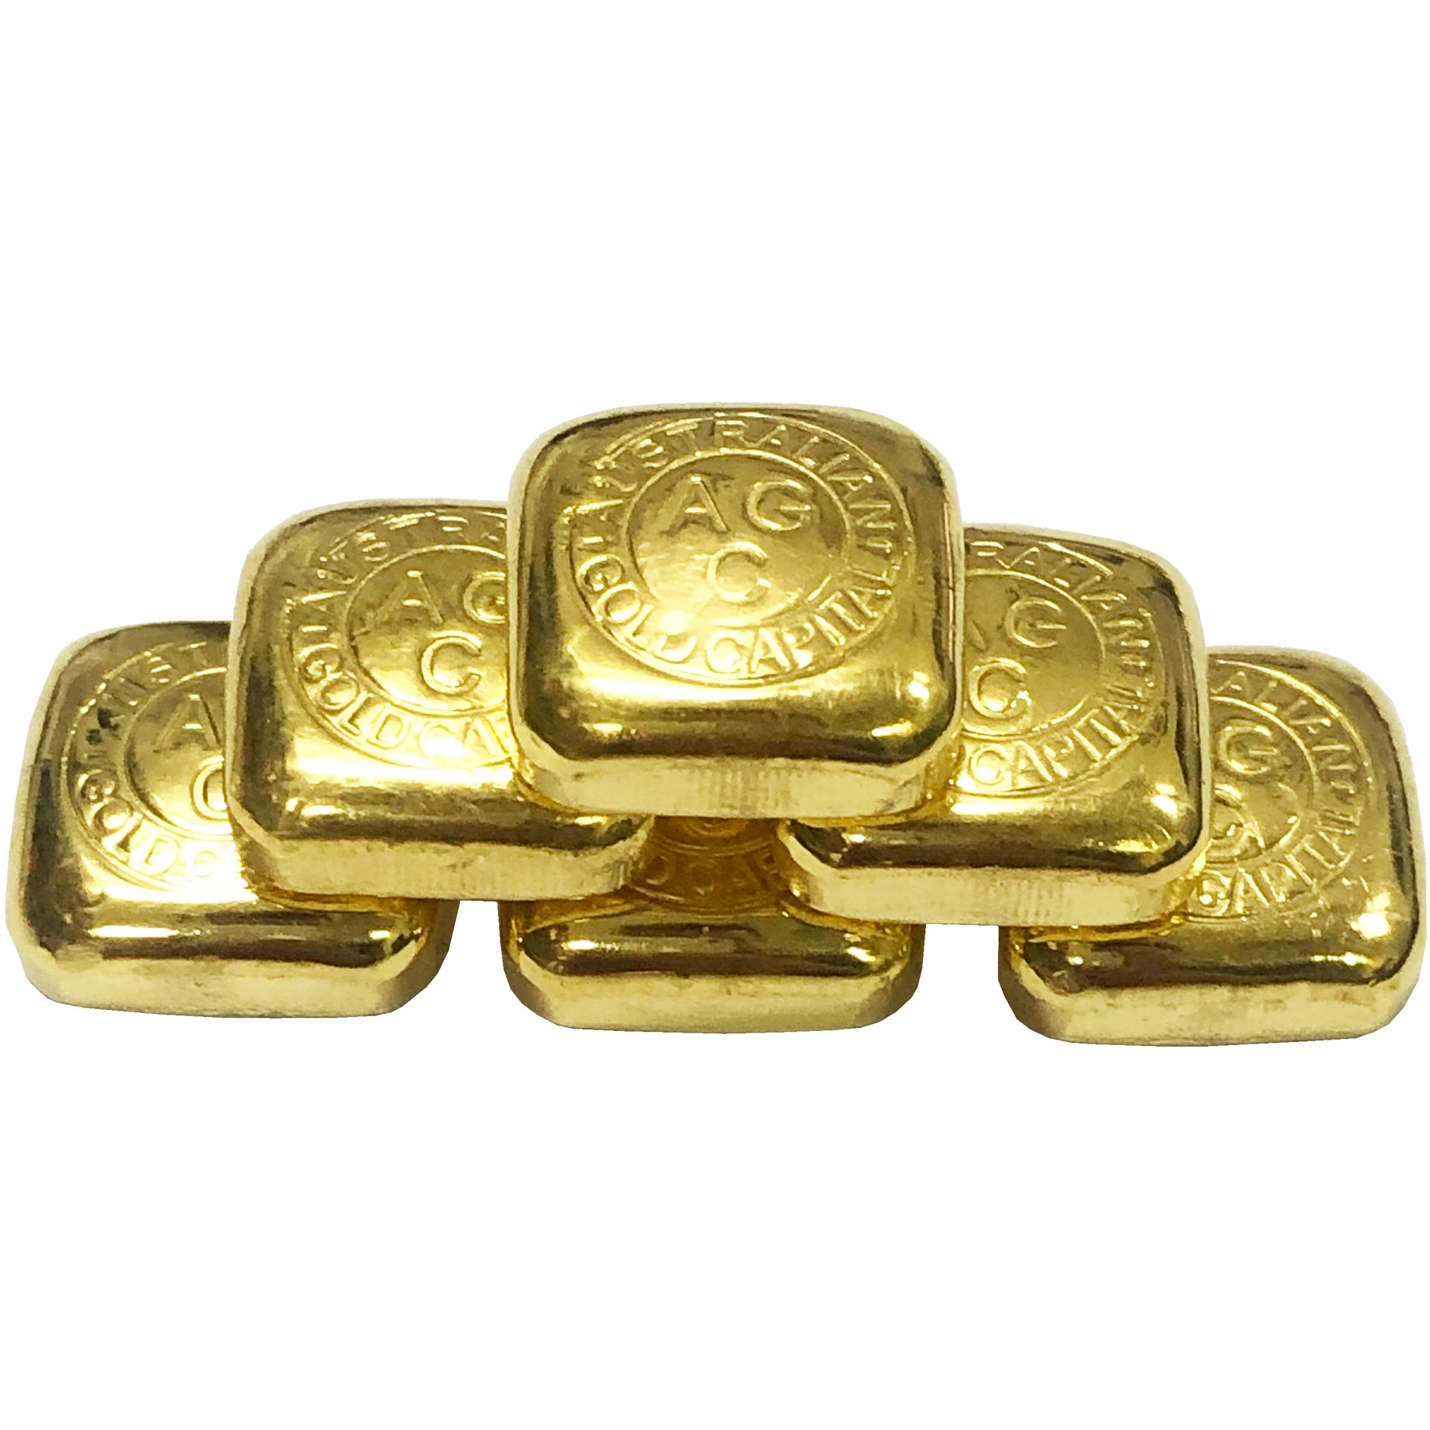 Gold Bullion Bars Pool Allocated Gold Bullion Share : 10 grams